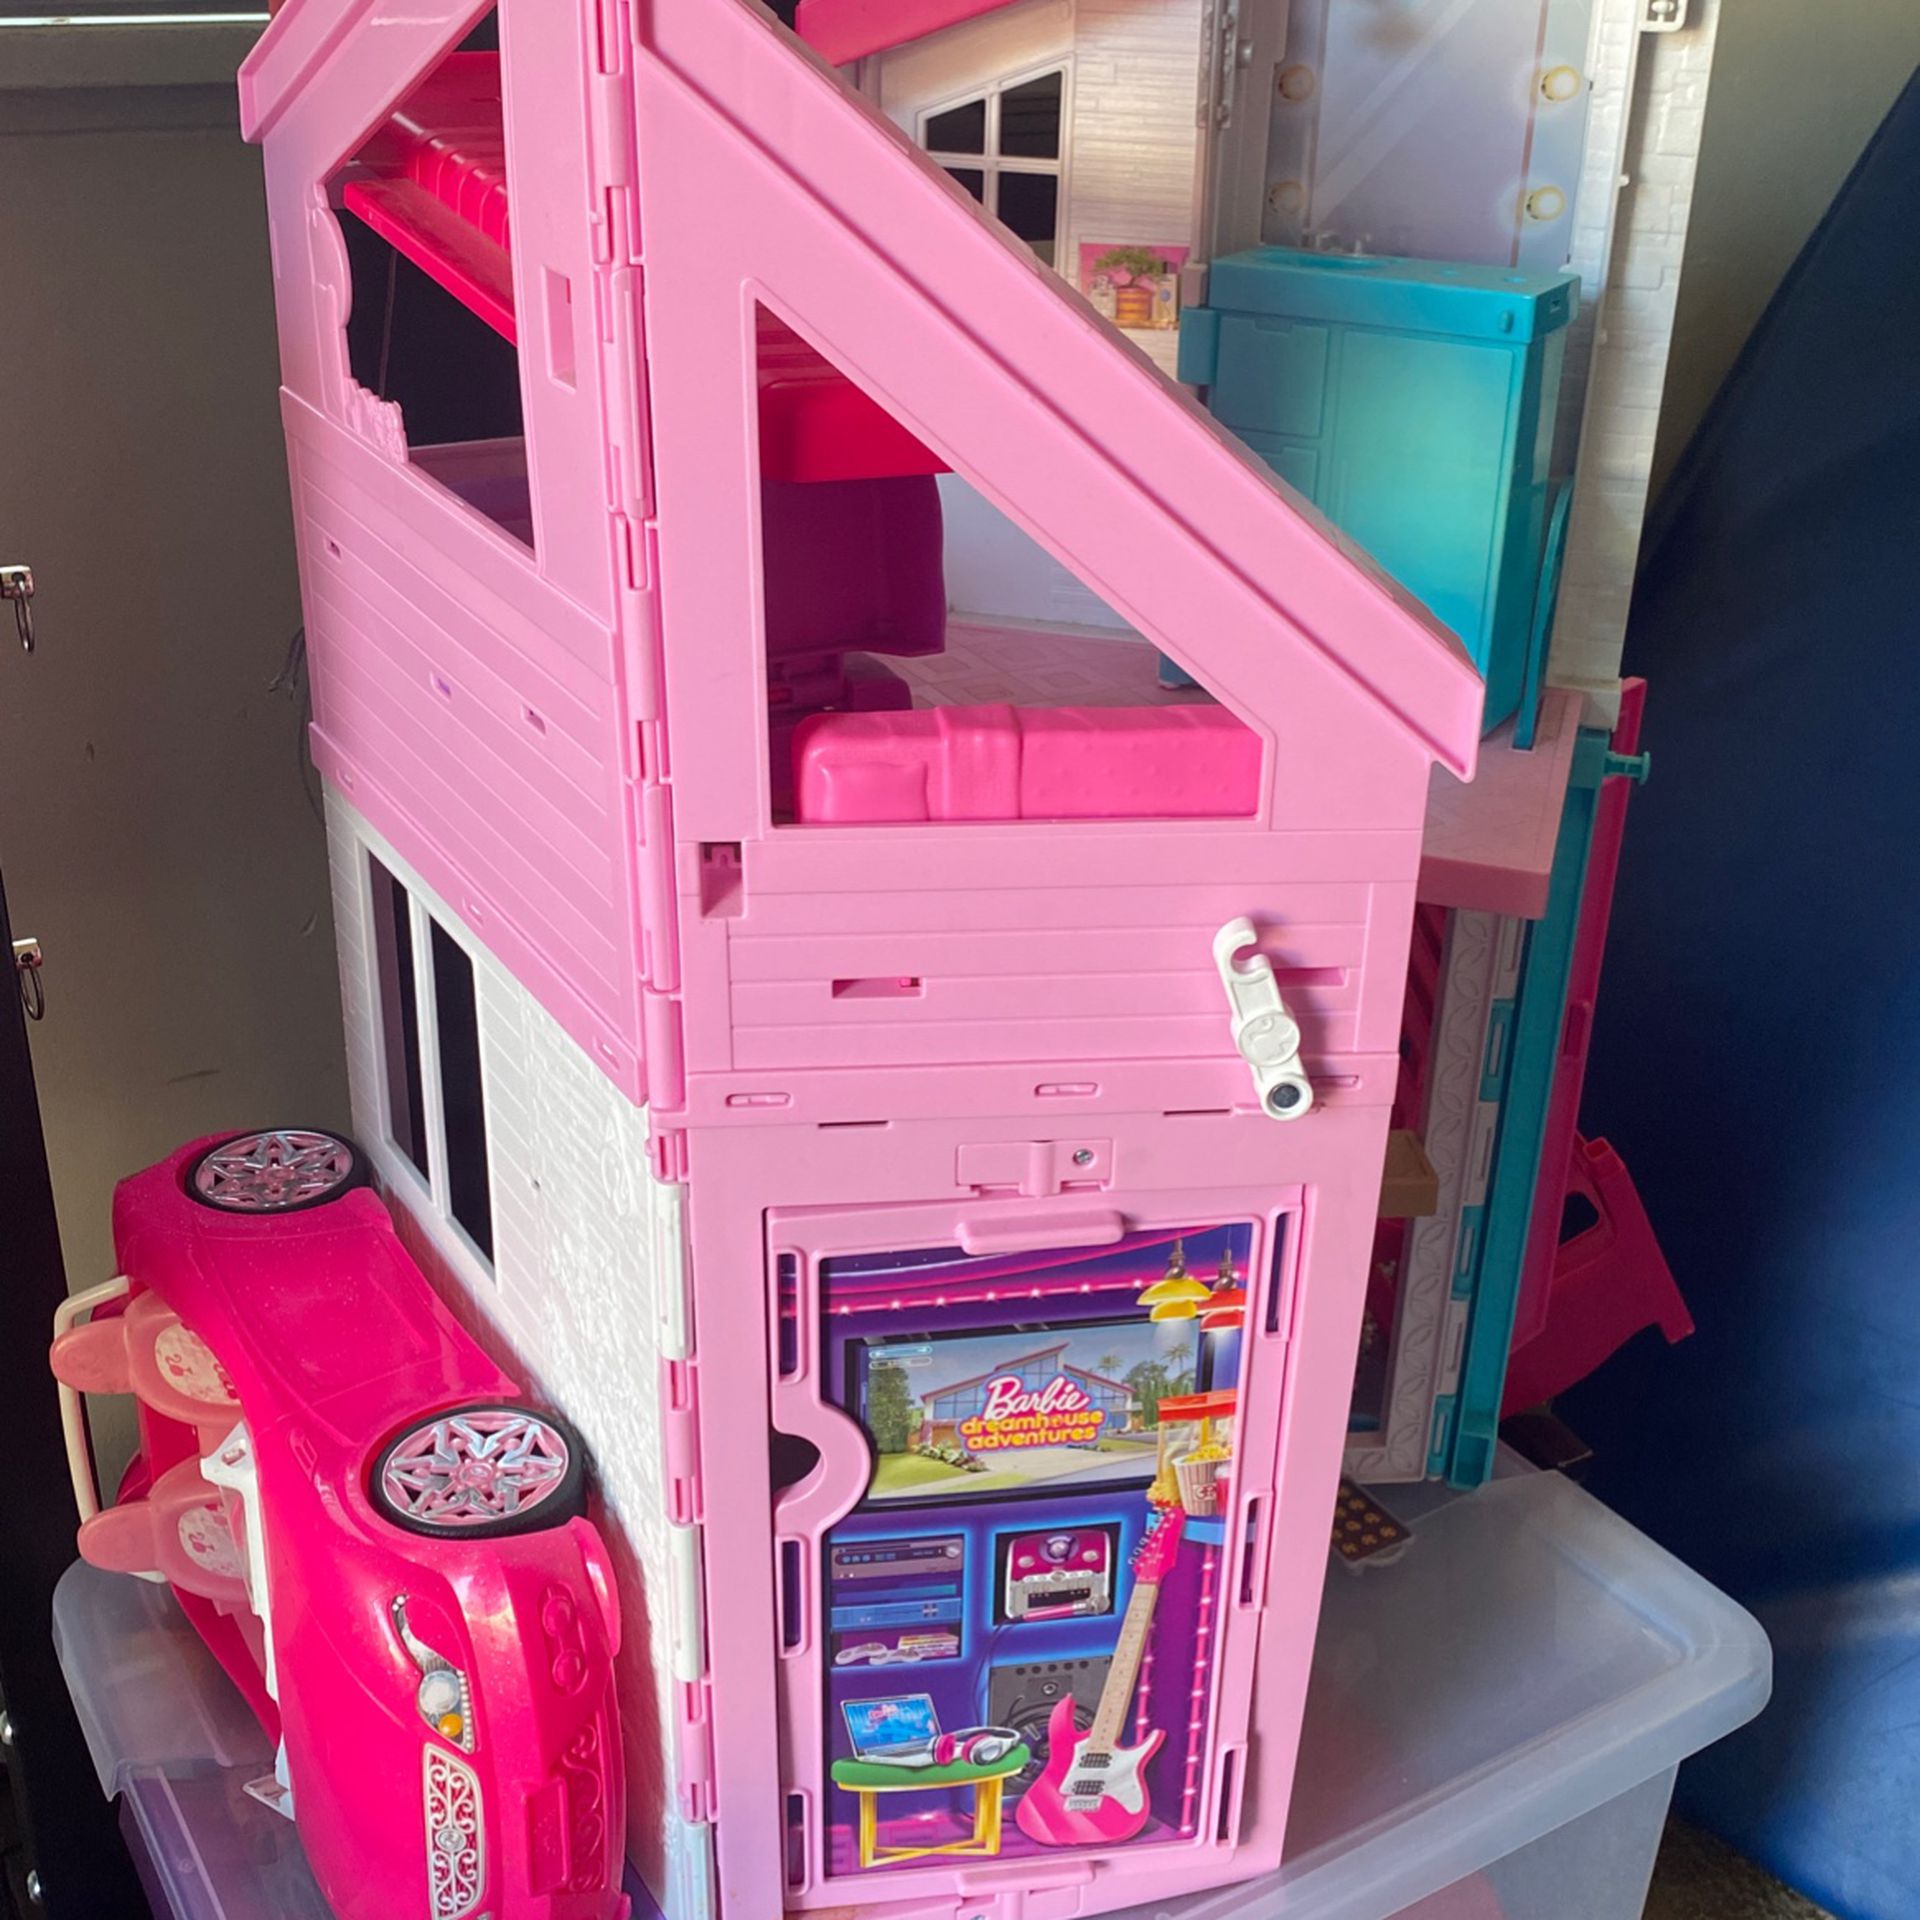 Barbie House 